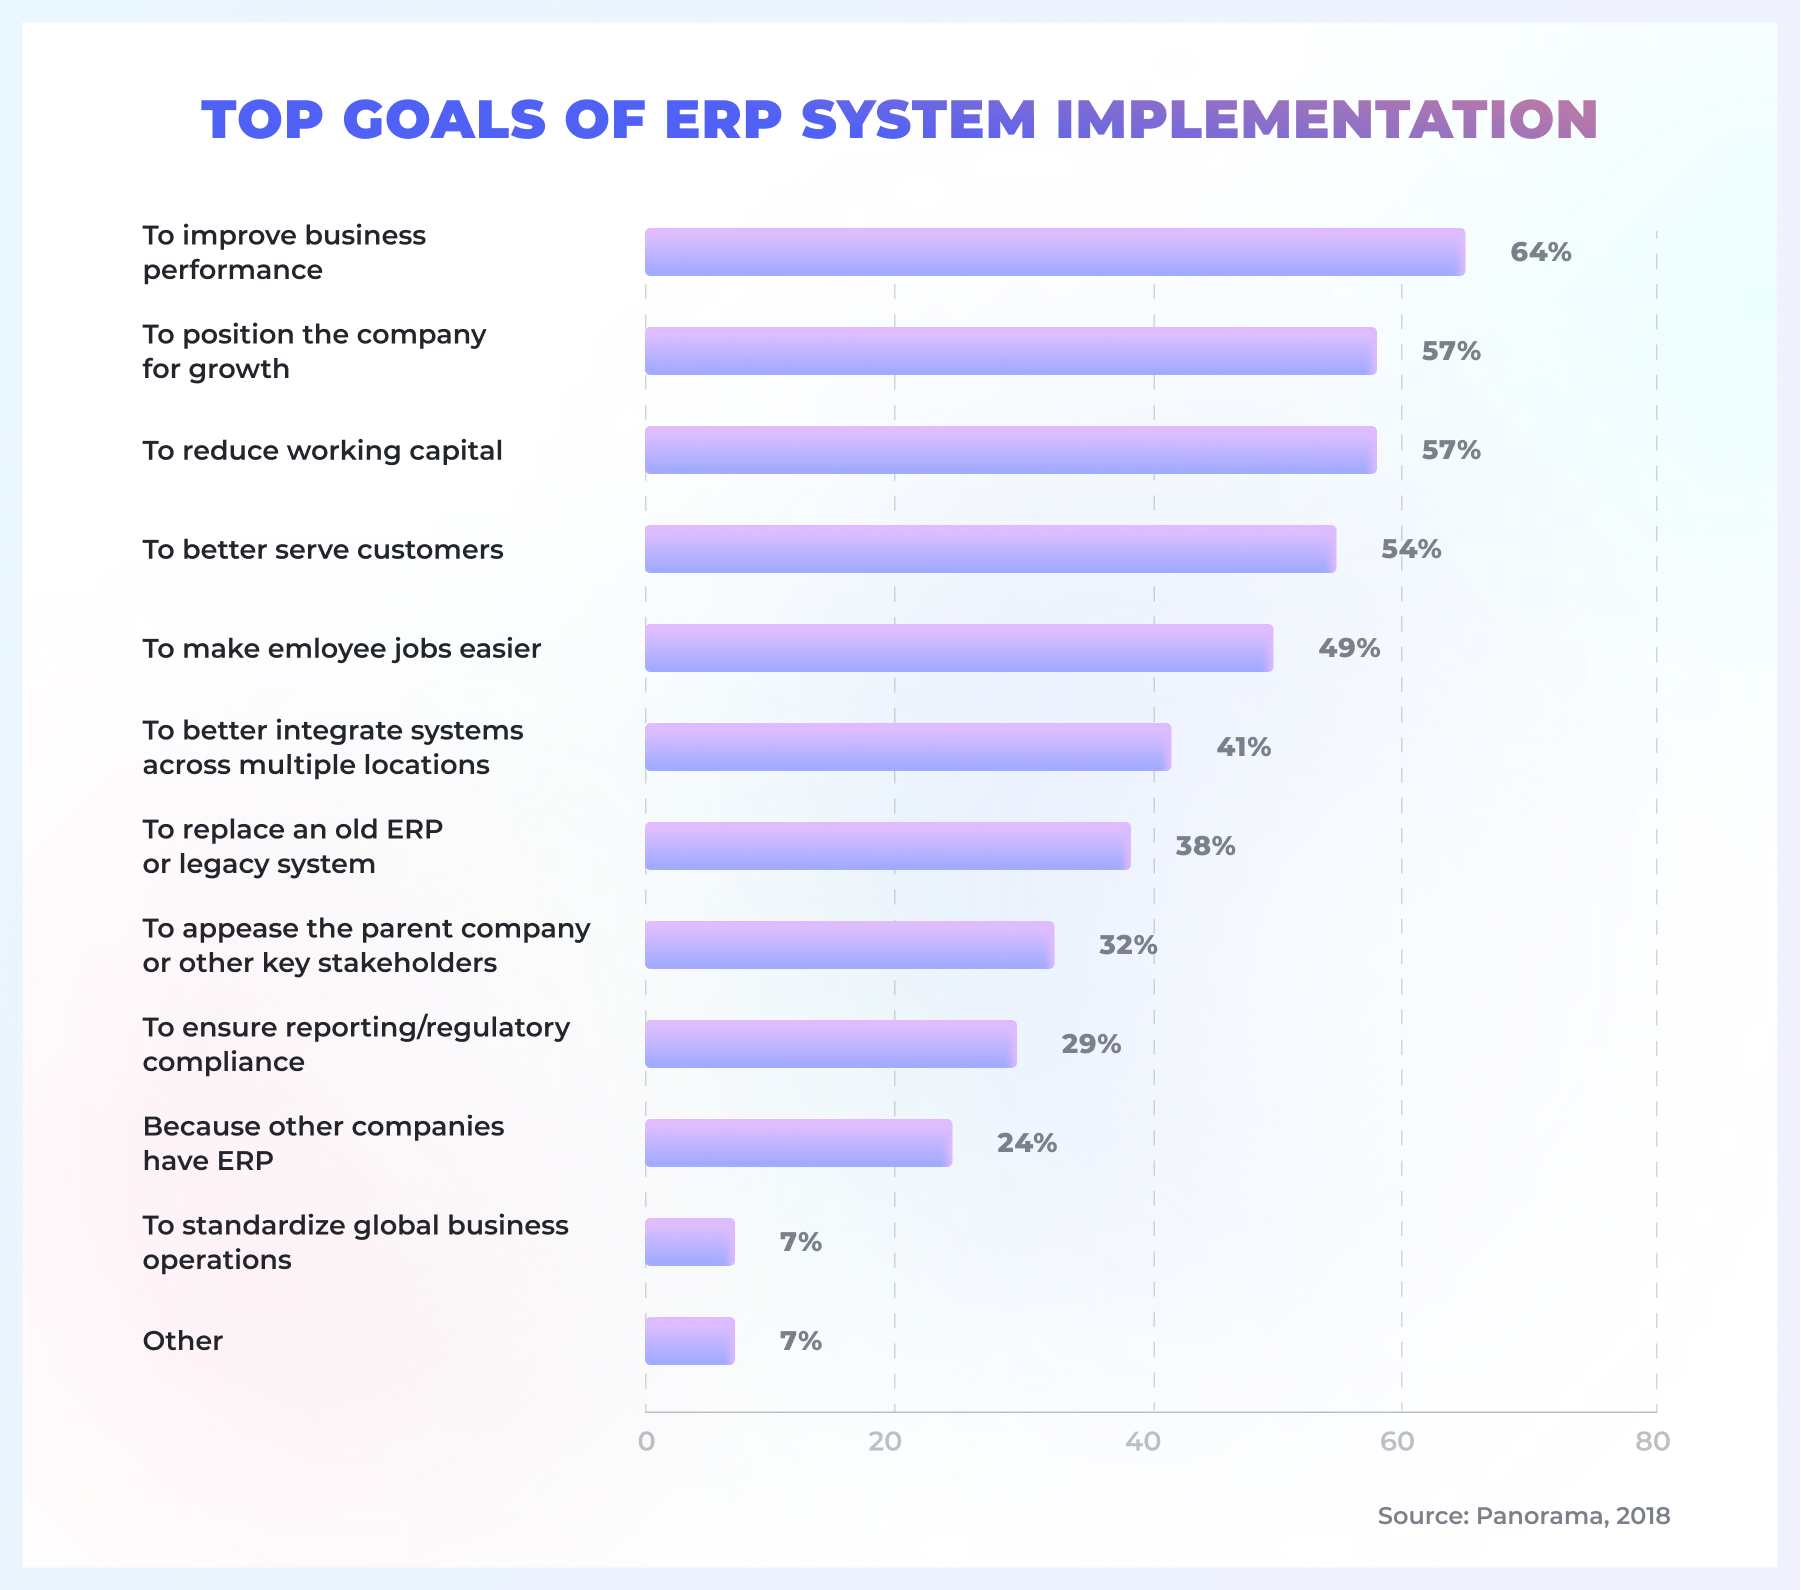 Goals of ERP implementation